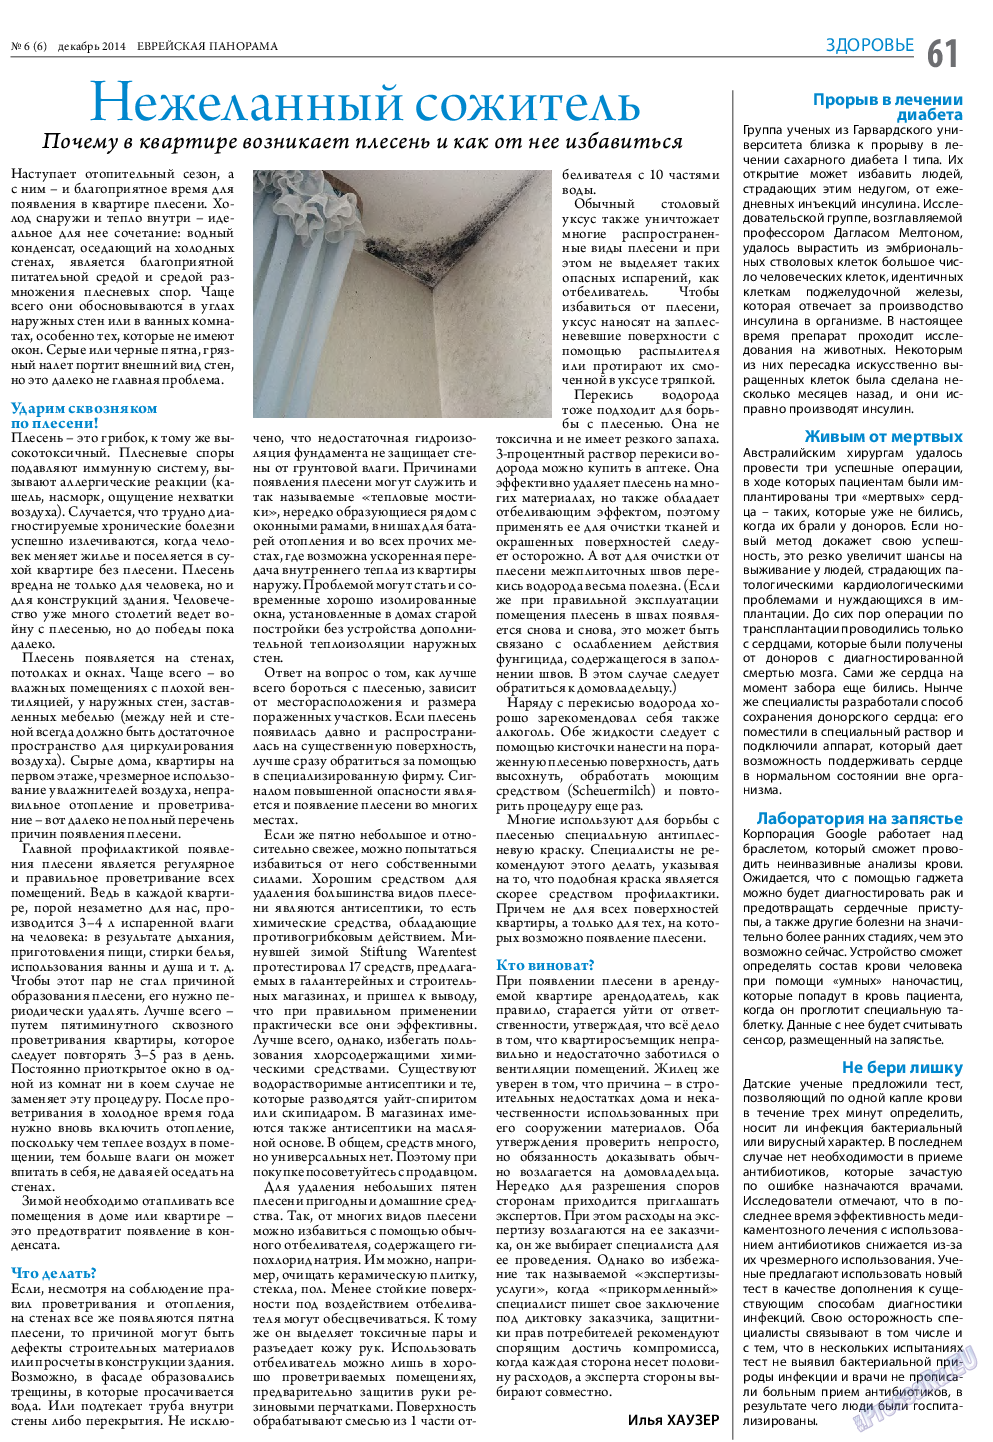 Еврейская панорама, газета. 2014 №6 стр.61